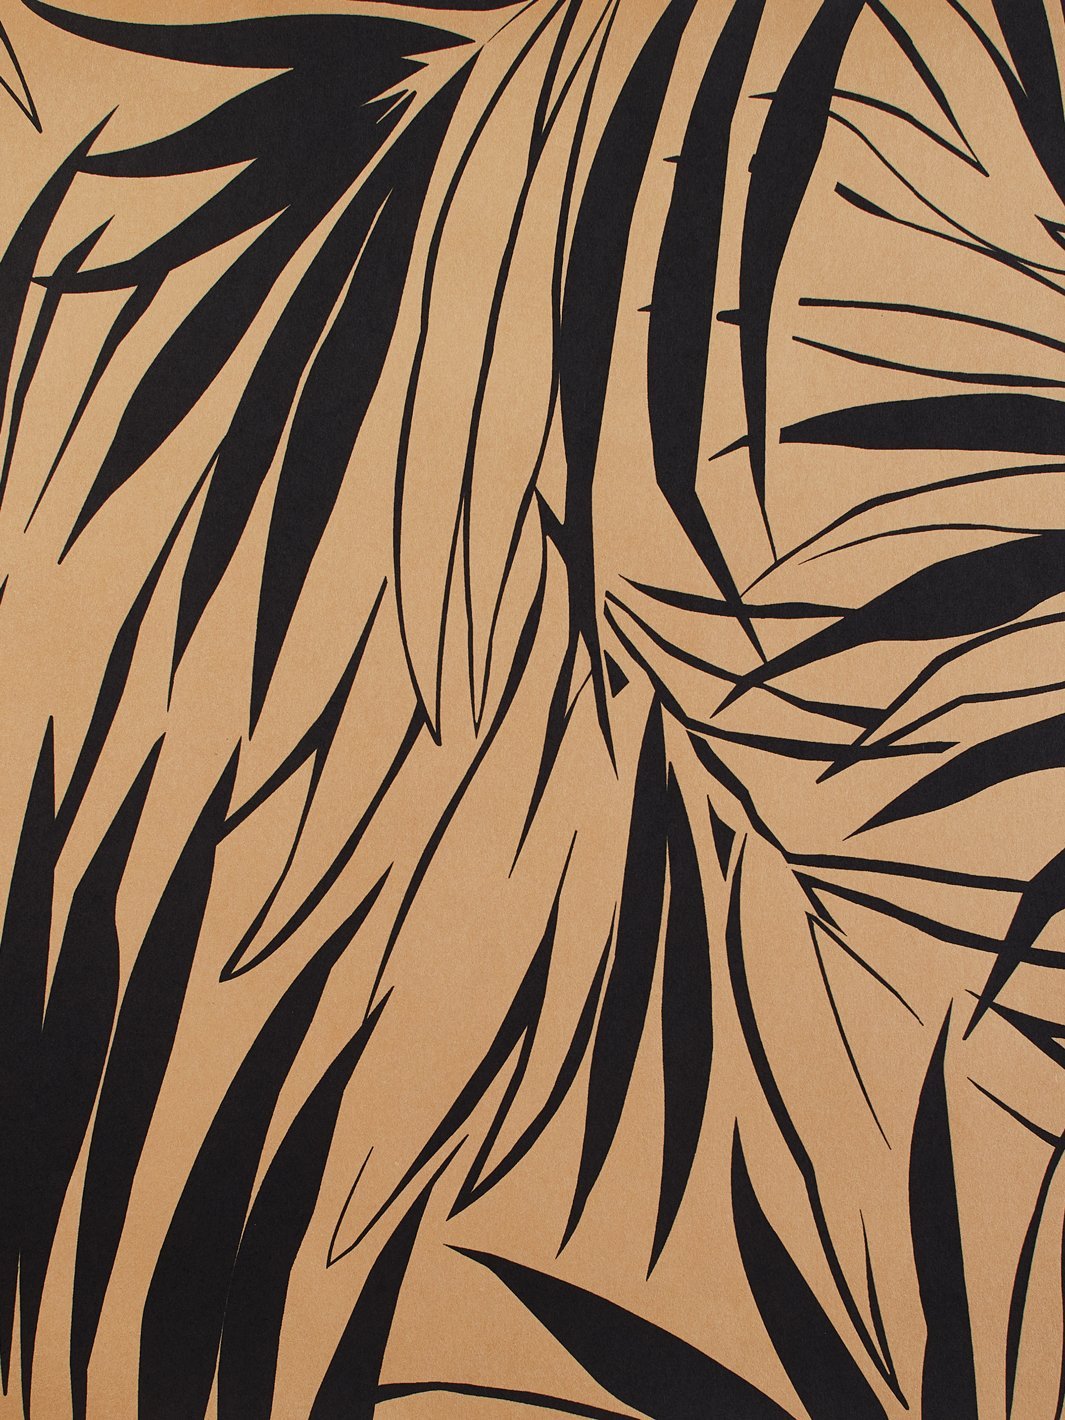 'Majesty Palm' Kraft' Wallpaper by Wallshoppe - Black